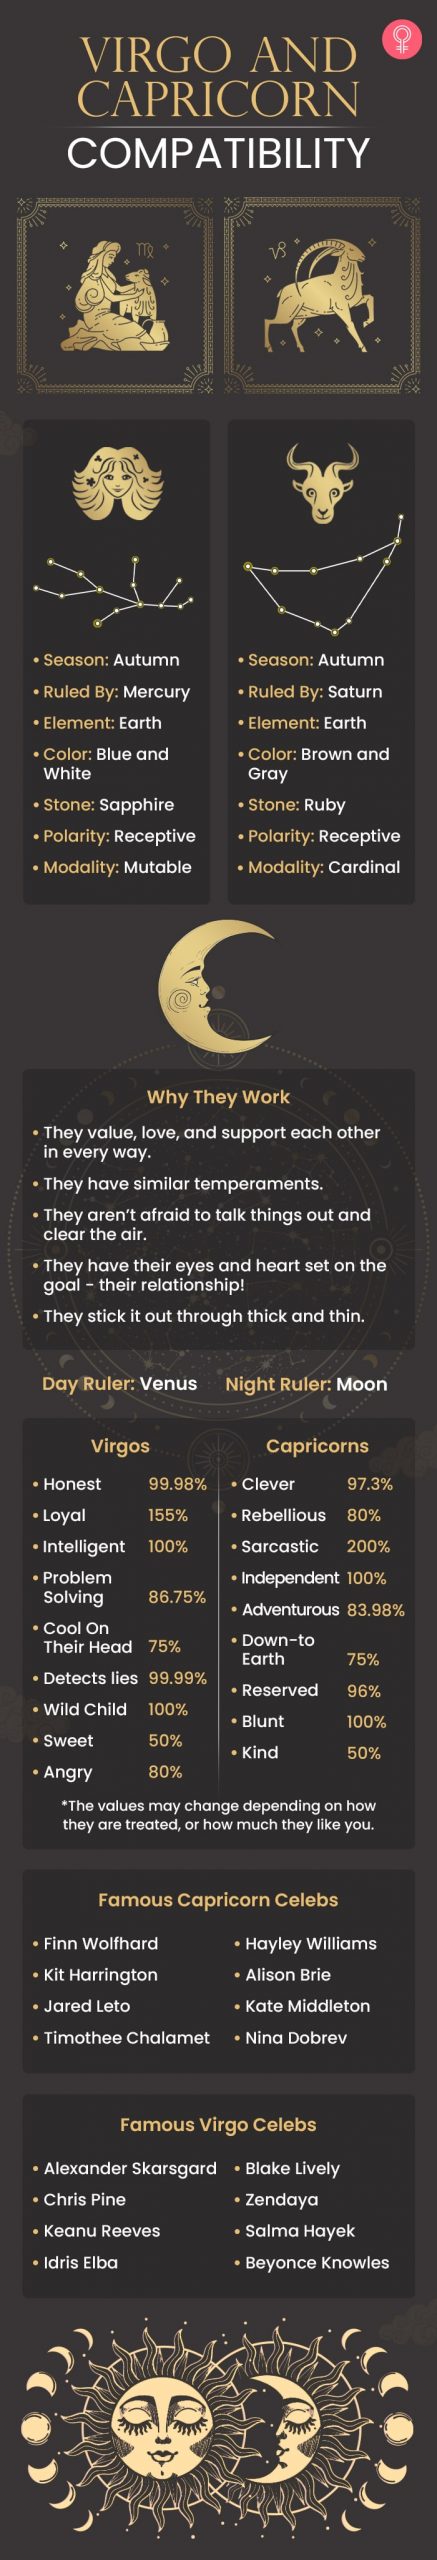 virgo and capricorn compatibility [infographic]